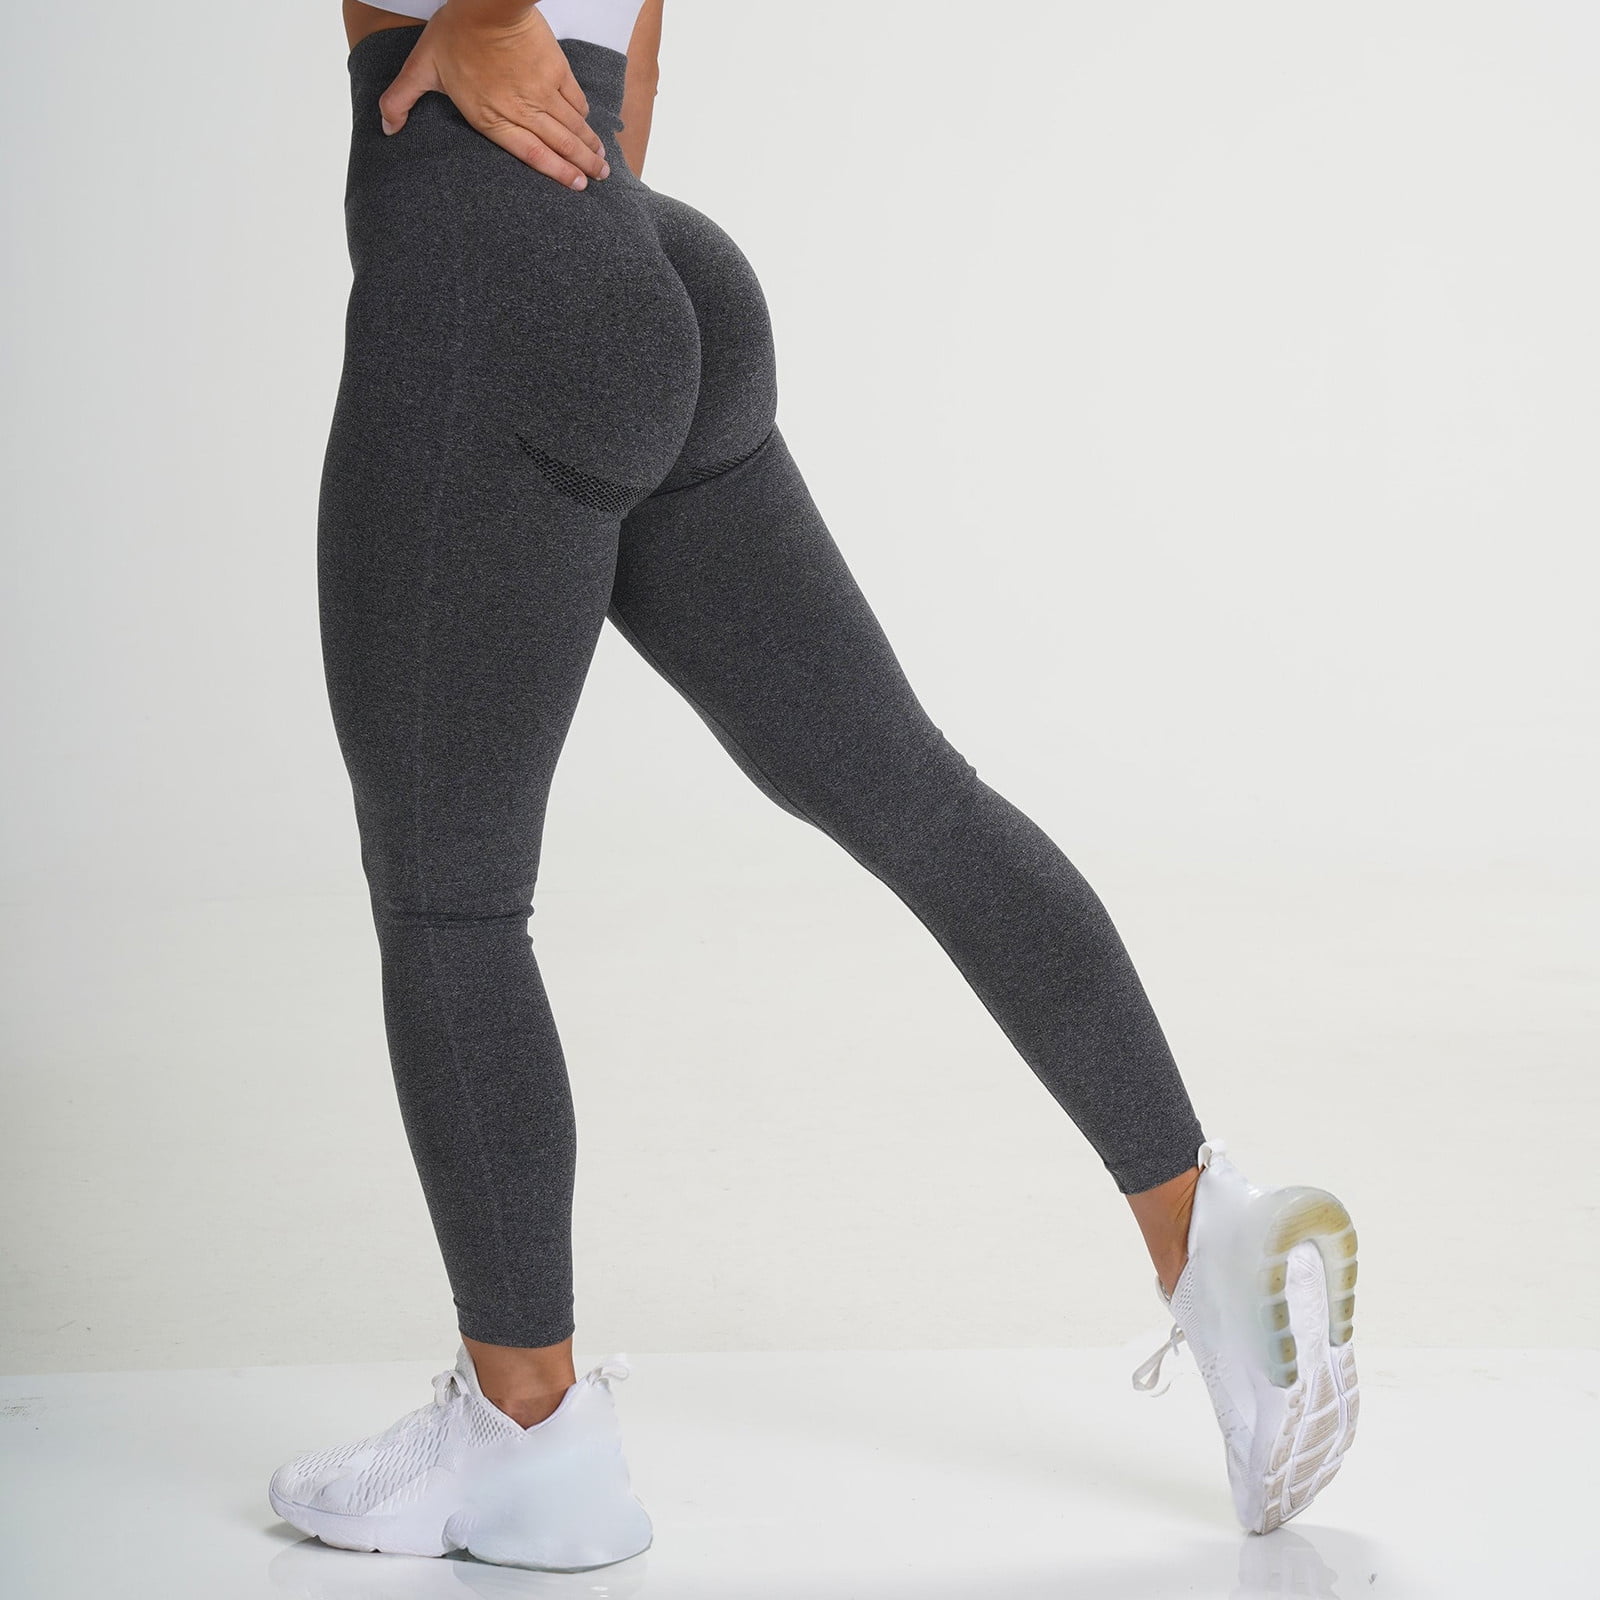 kpoplk Boot Cut Yoga Pants Women,Women's Joggers Pants Lightweight